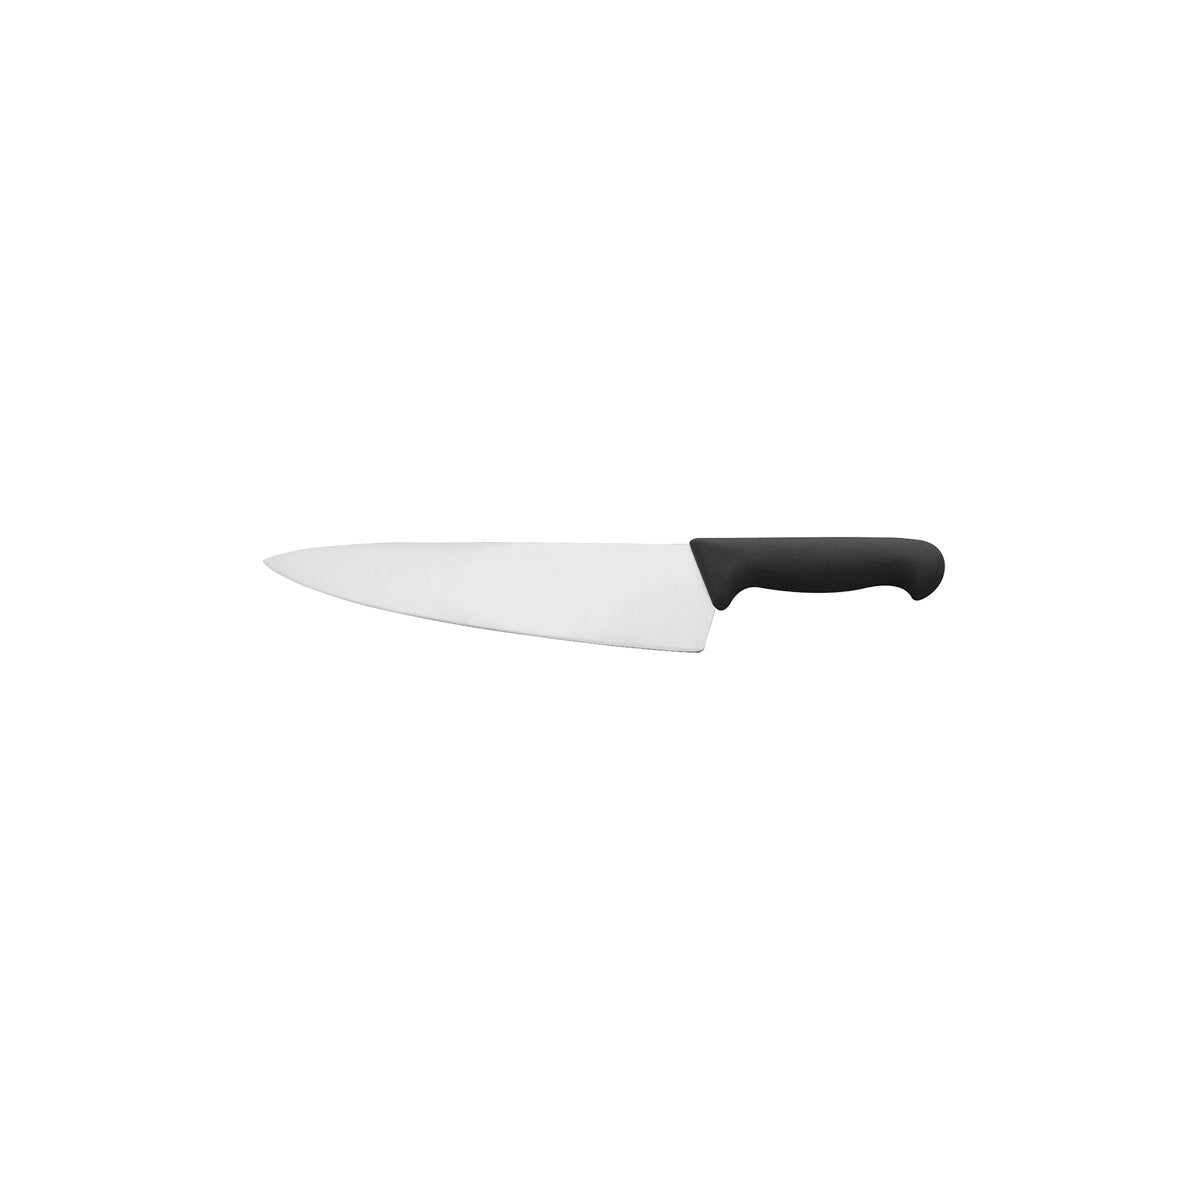 25108 Ivo Professional 55000 Chefs Knife 200mm Tomkin Australia Hospitality Supplies